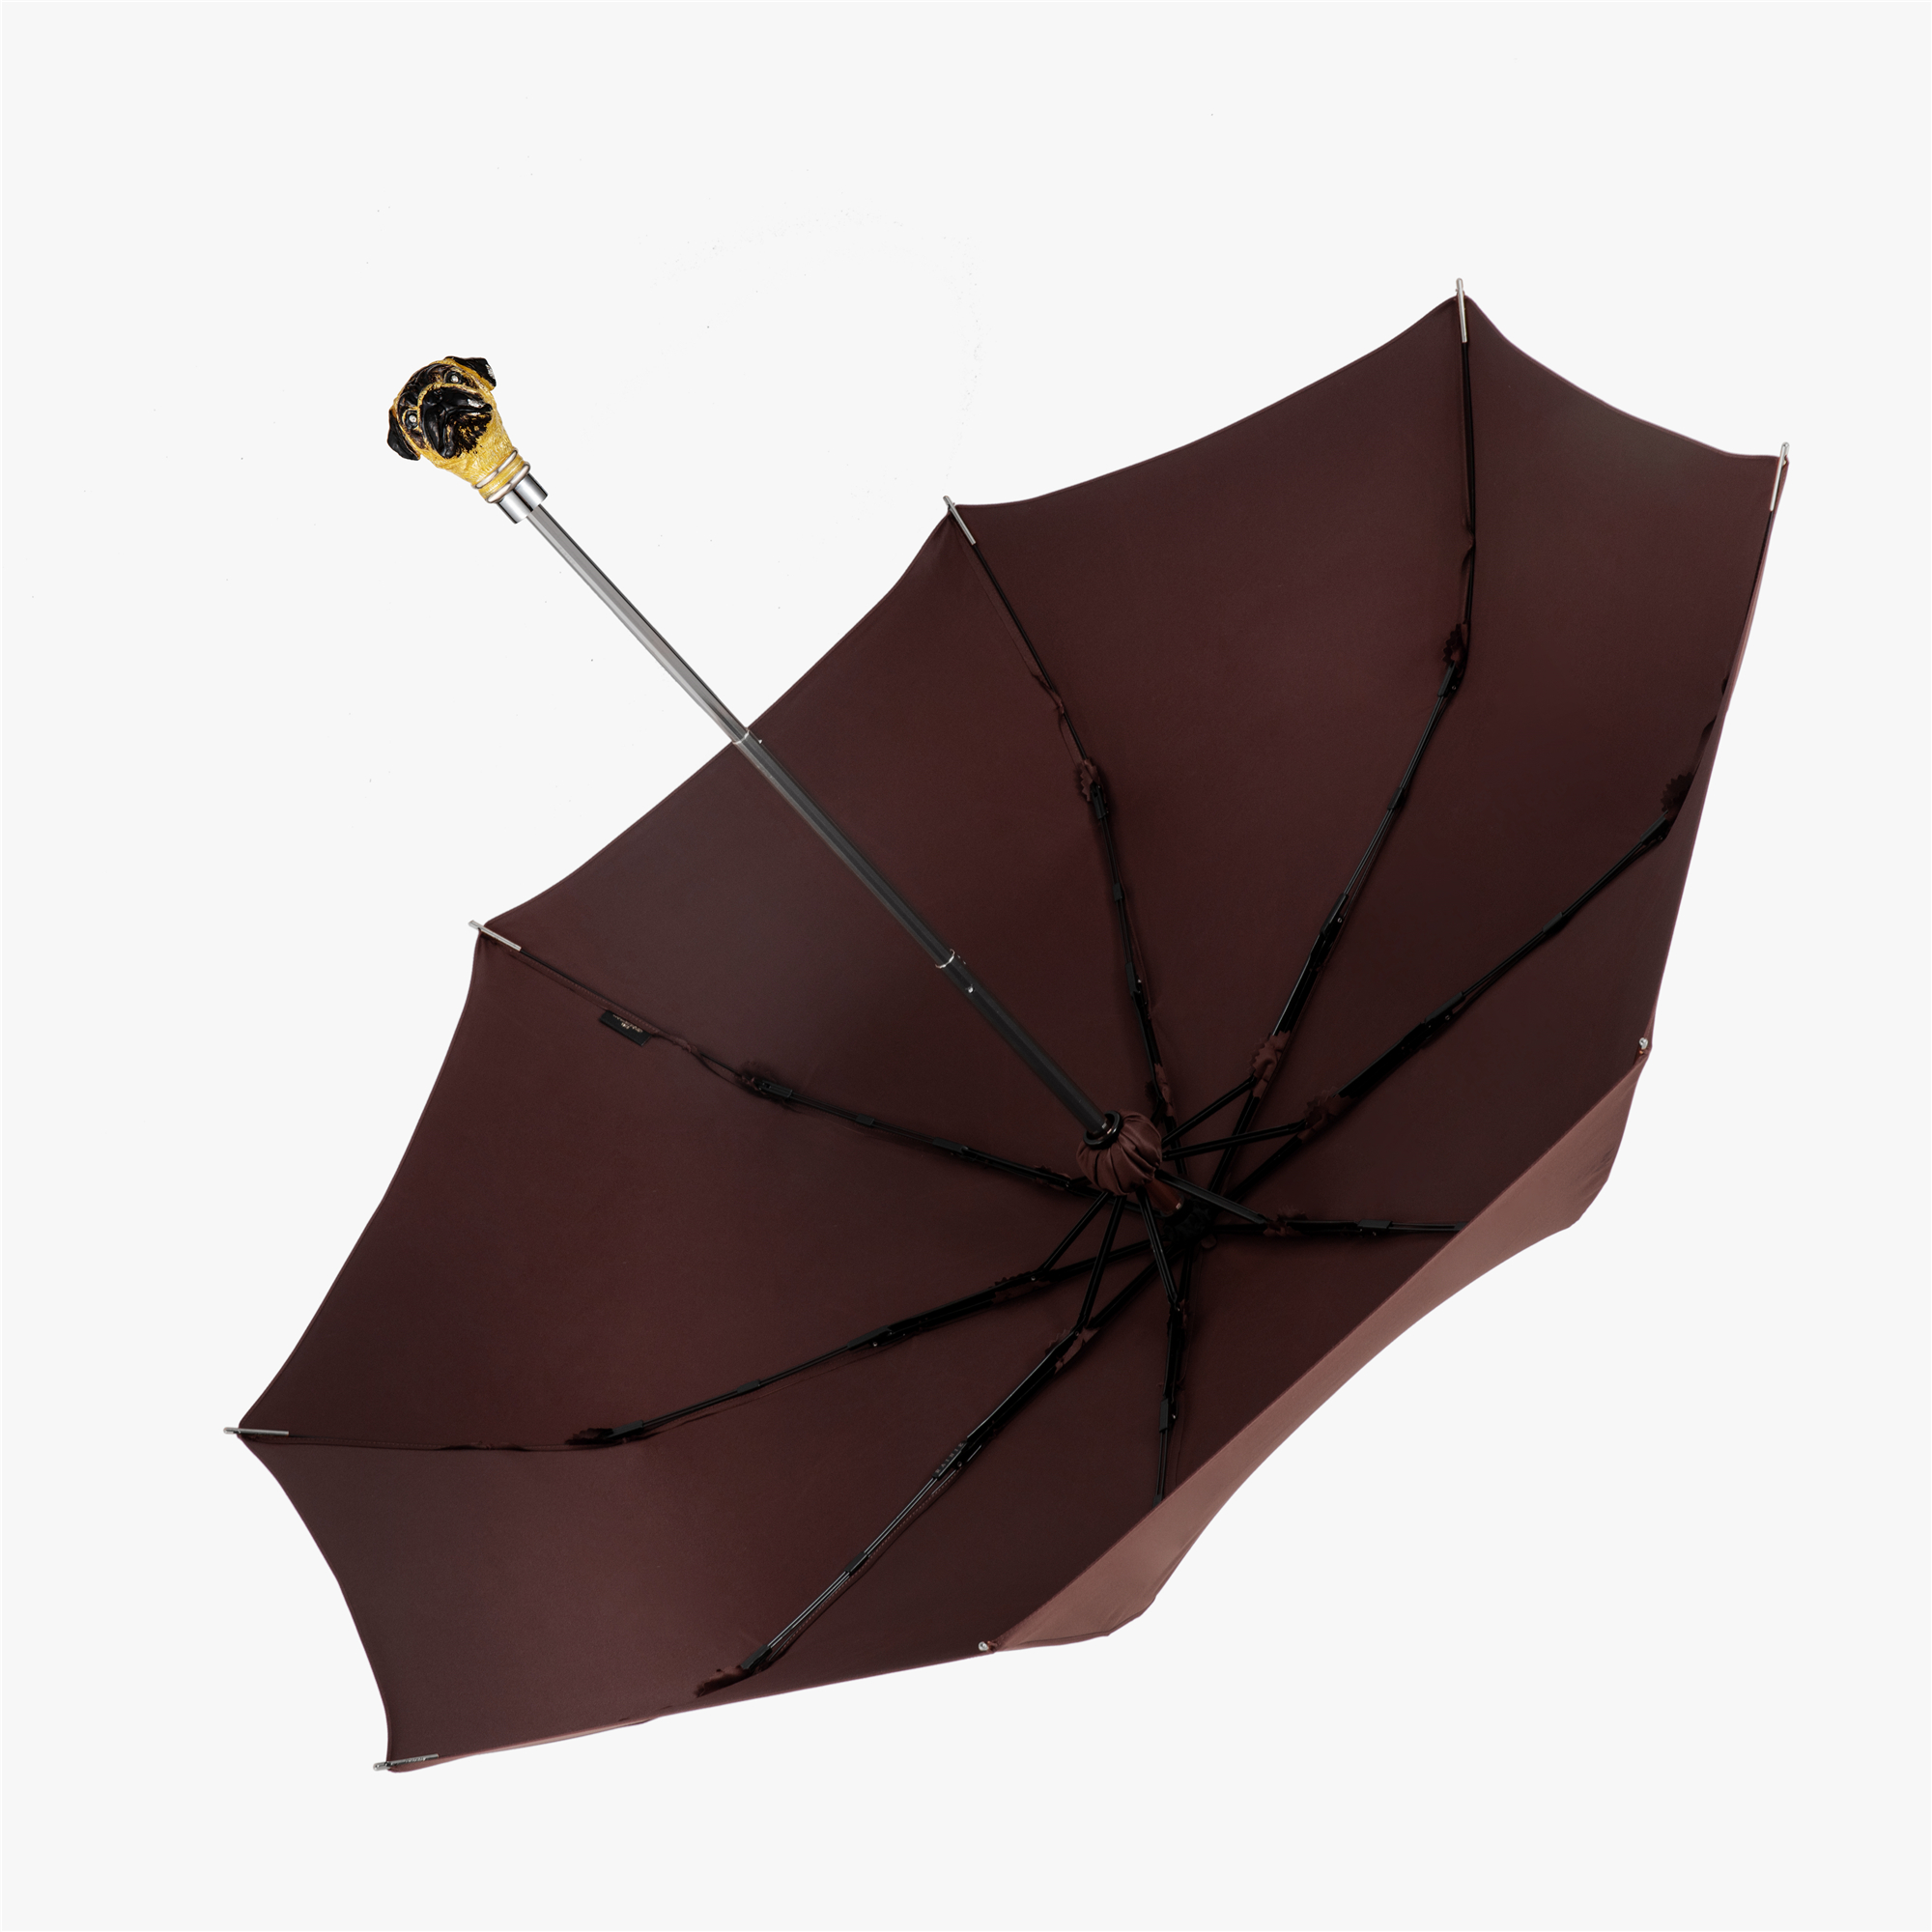 Enamelled Pugs folding umbrella